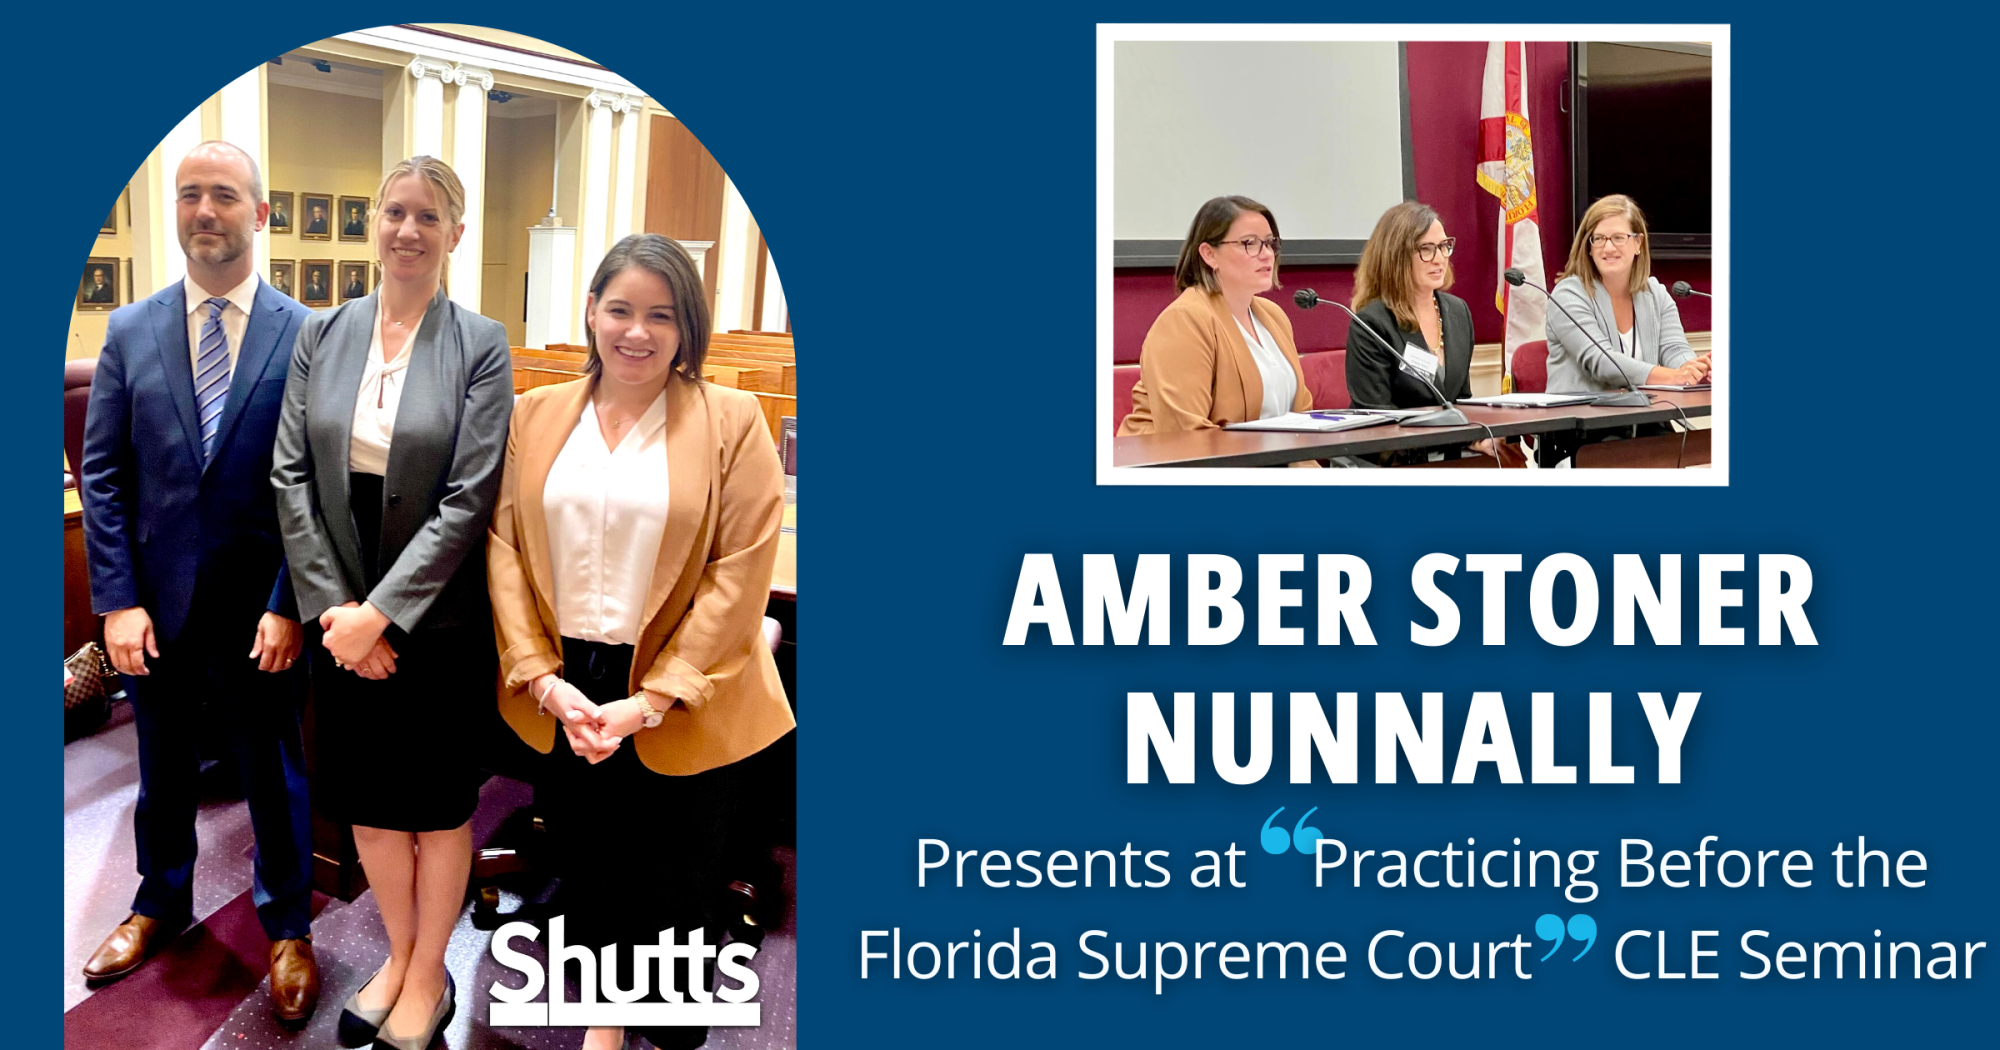 Amber Stoner Nunnally Presents at “Practicing Before the Florida Supreme Court” CLE Seminar